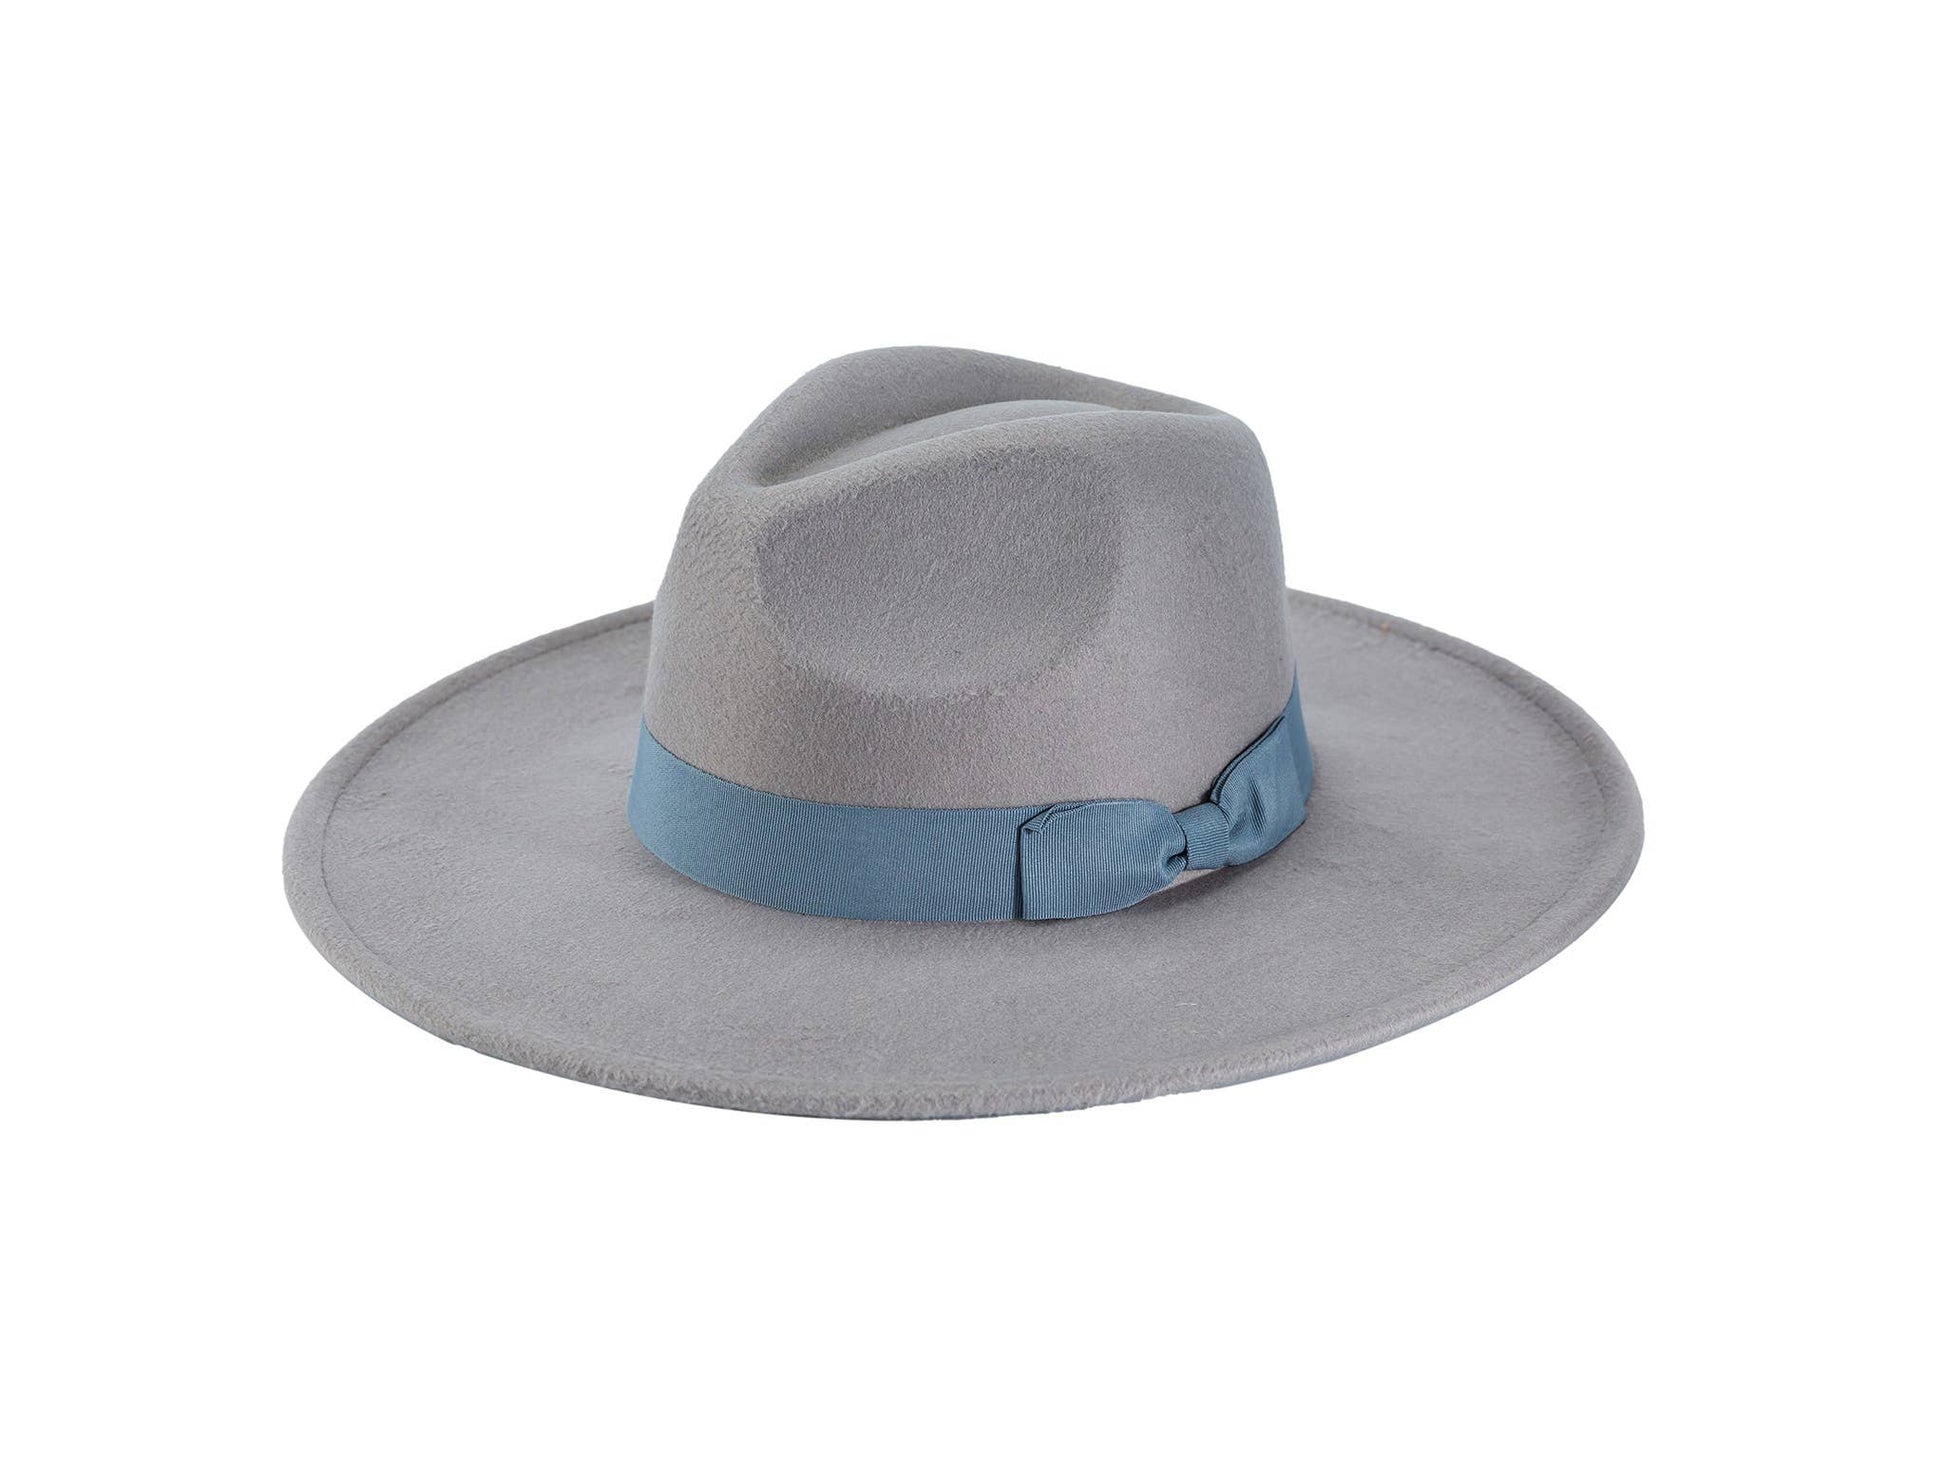 Wide Brim Felt Hat with Ribbon - Grey/Blue - Pinned Up Bra Lounge